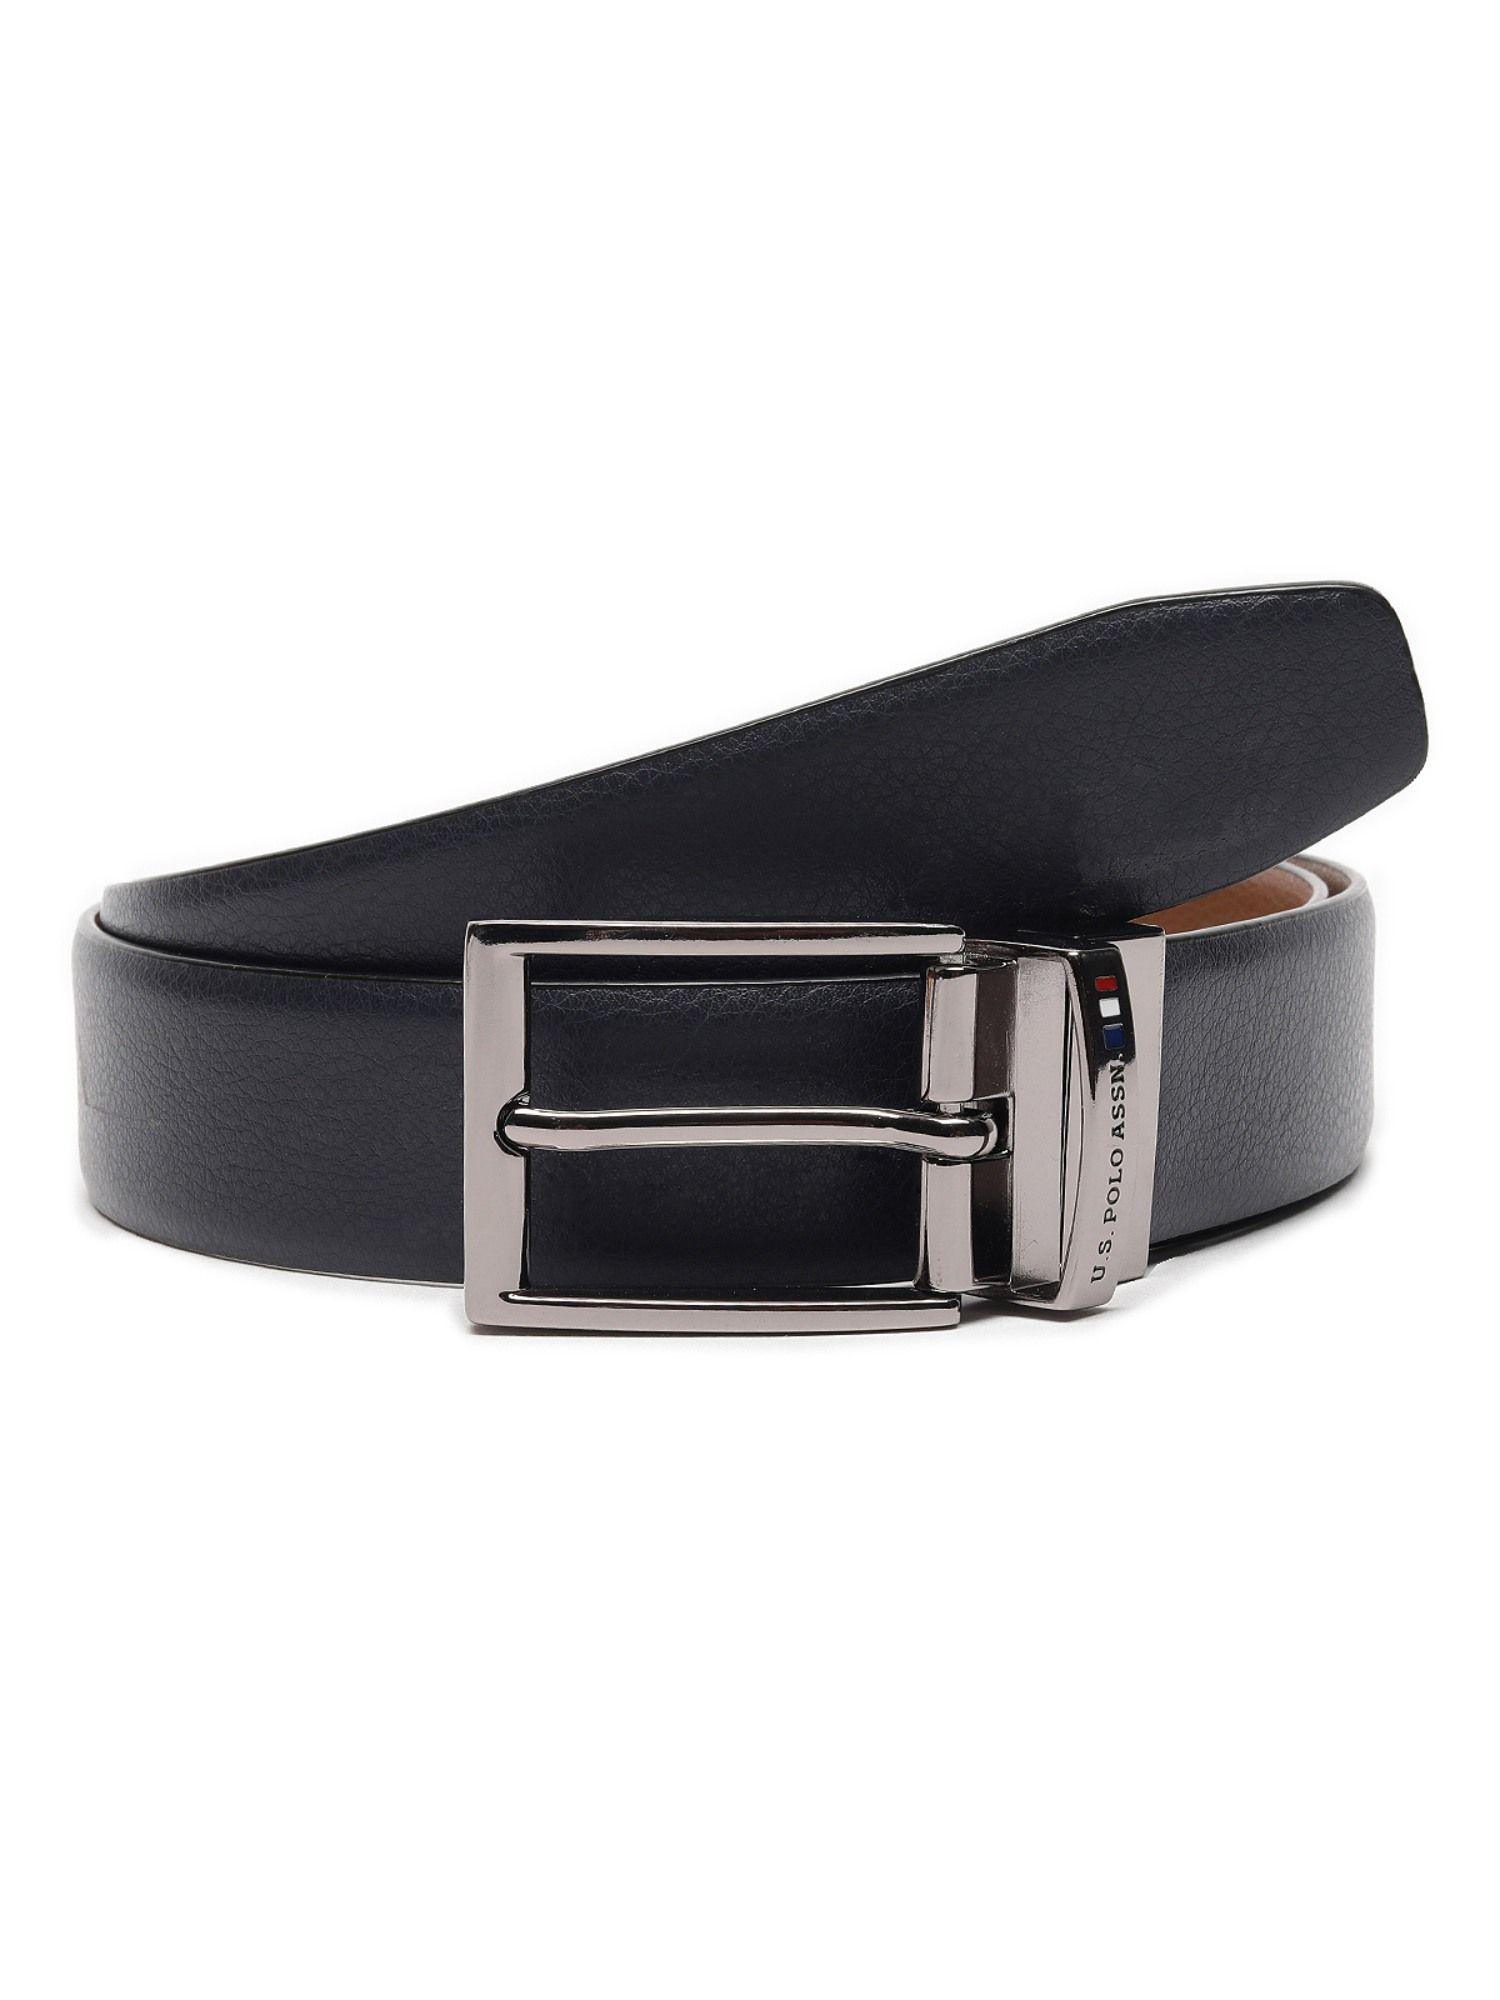 naples men's black and tan reversible belt